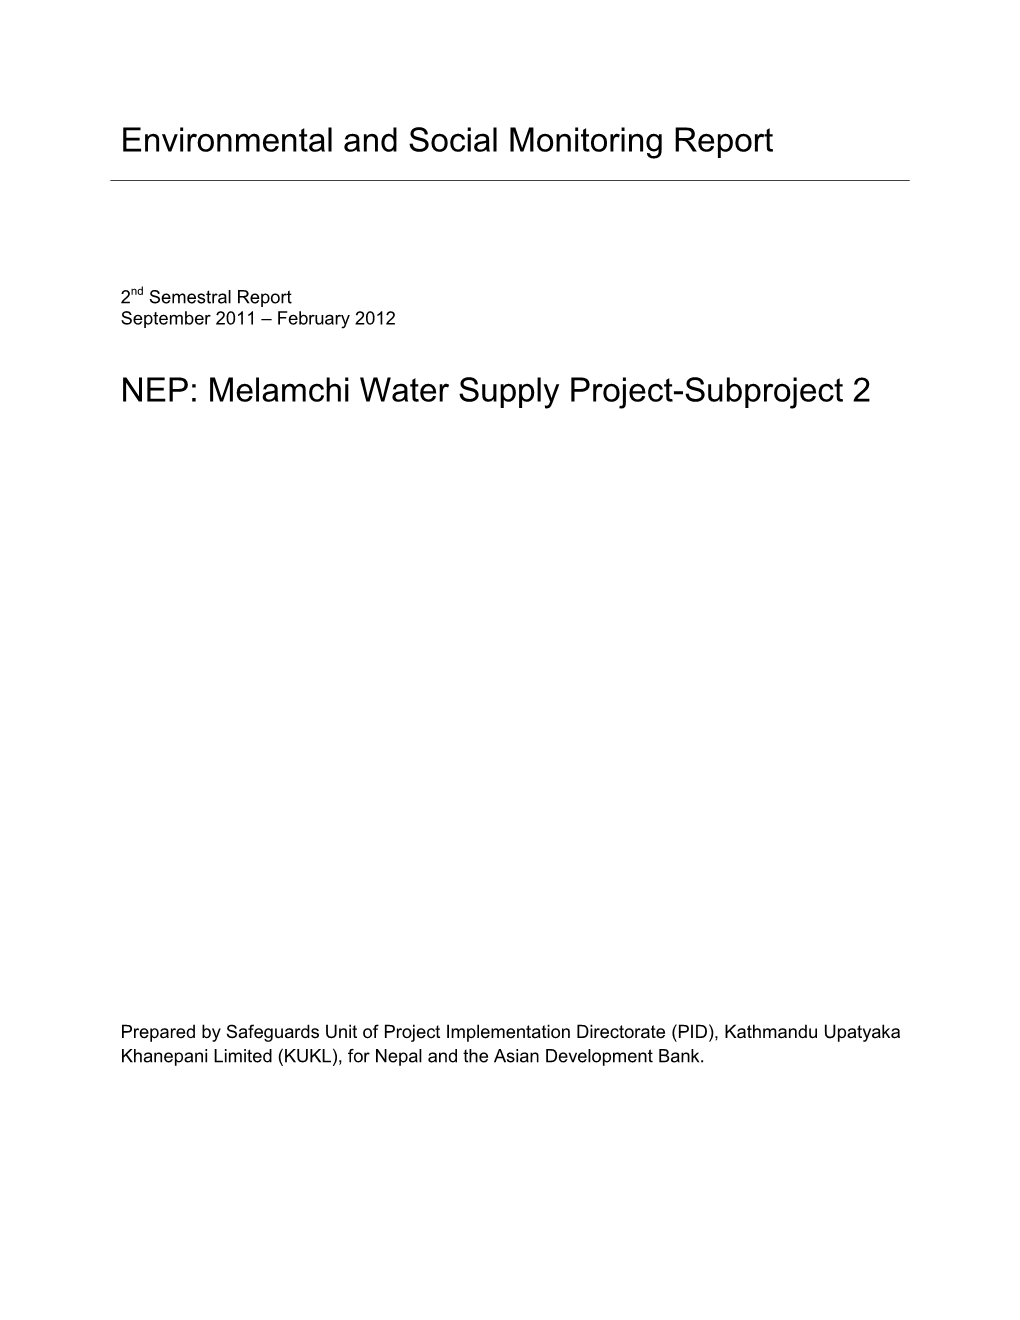 EMR: Nepal: Melamchi Water Supply Project